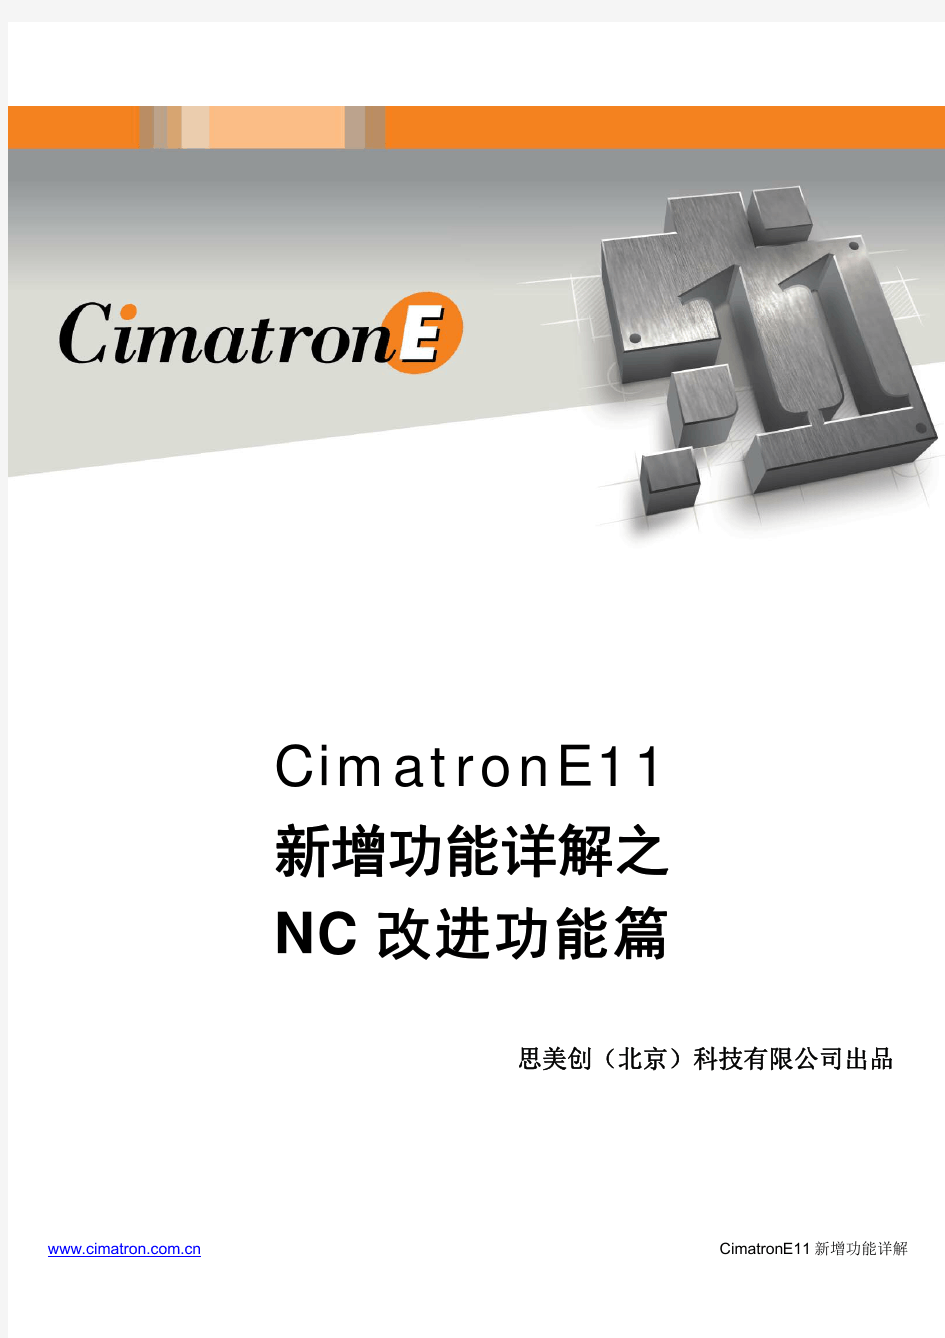 CimatronE11加工改进功能